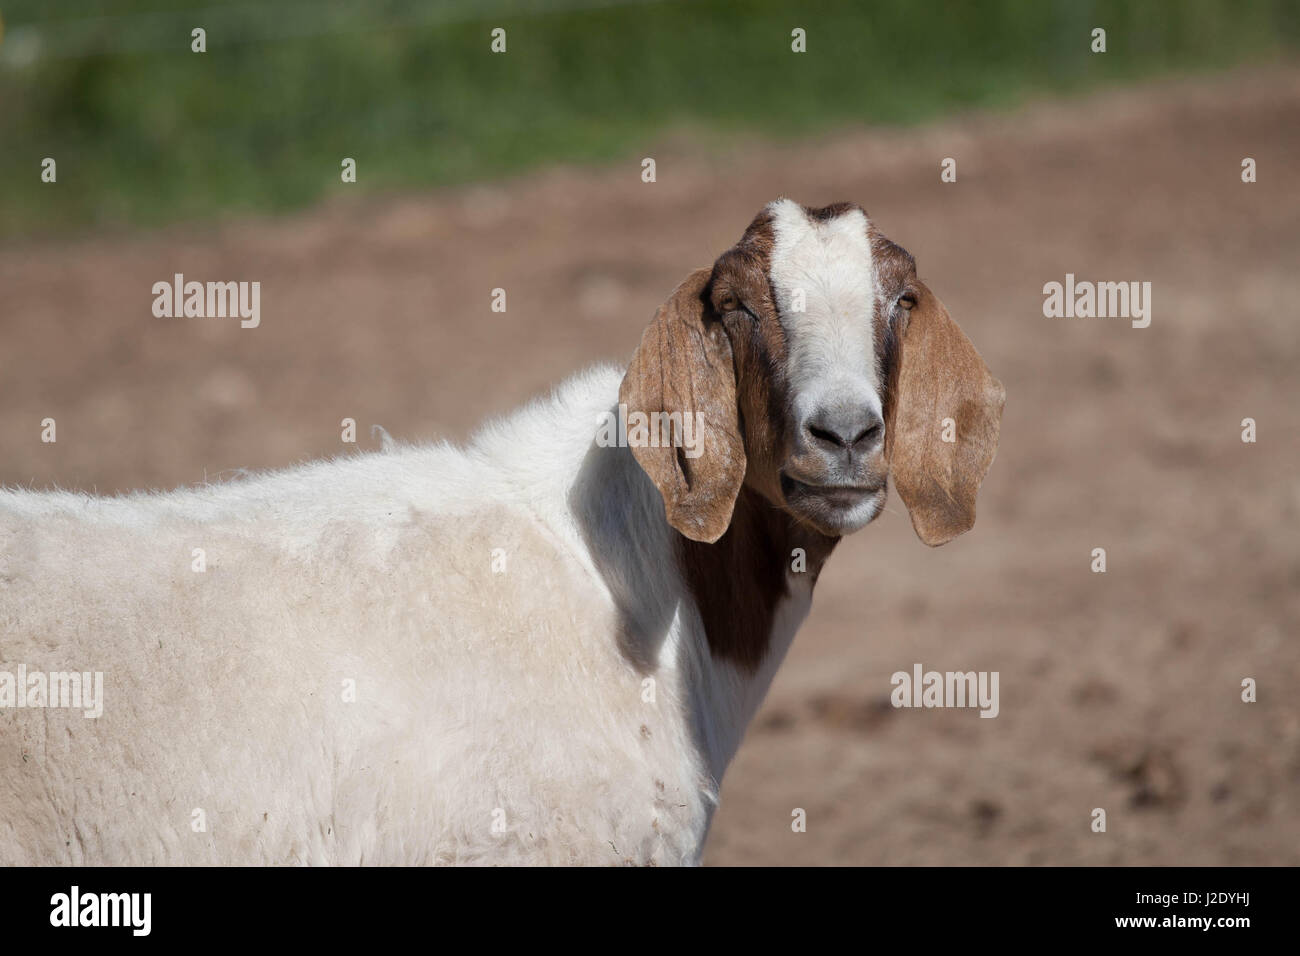 Goat4443   Stock Photo